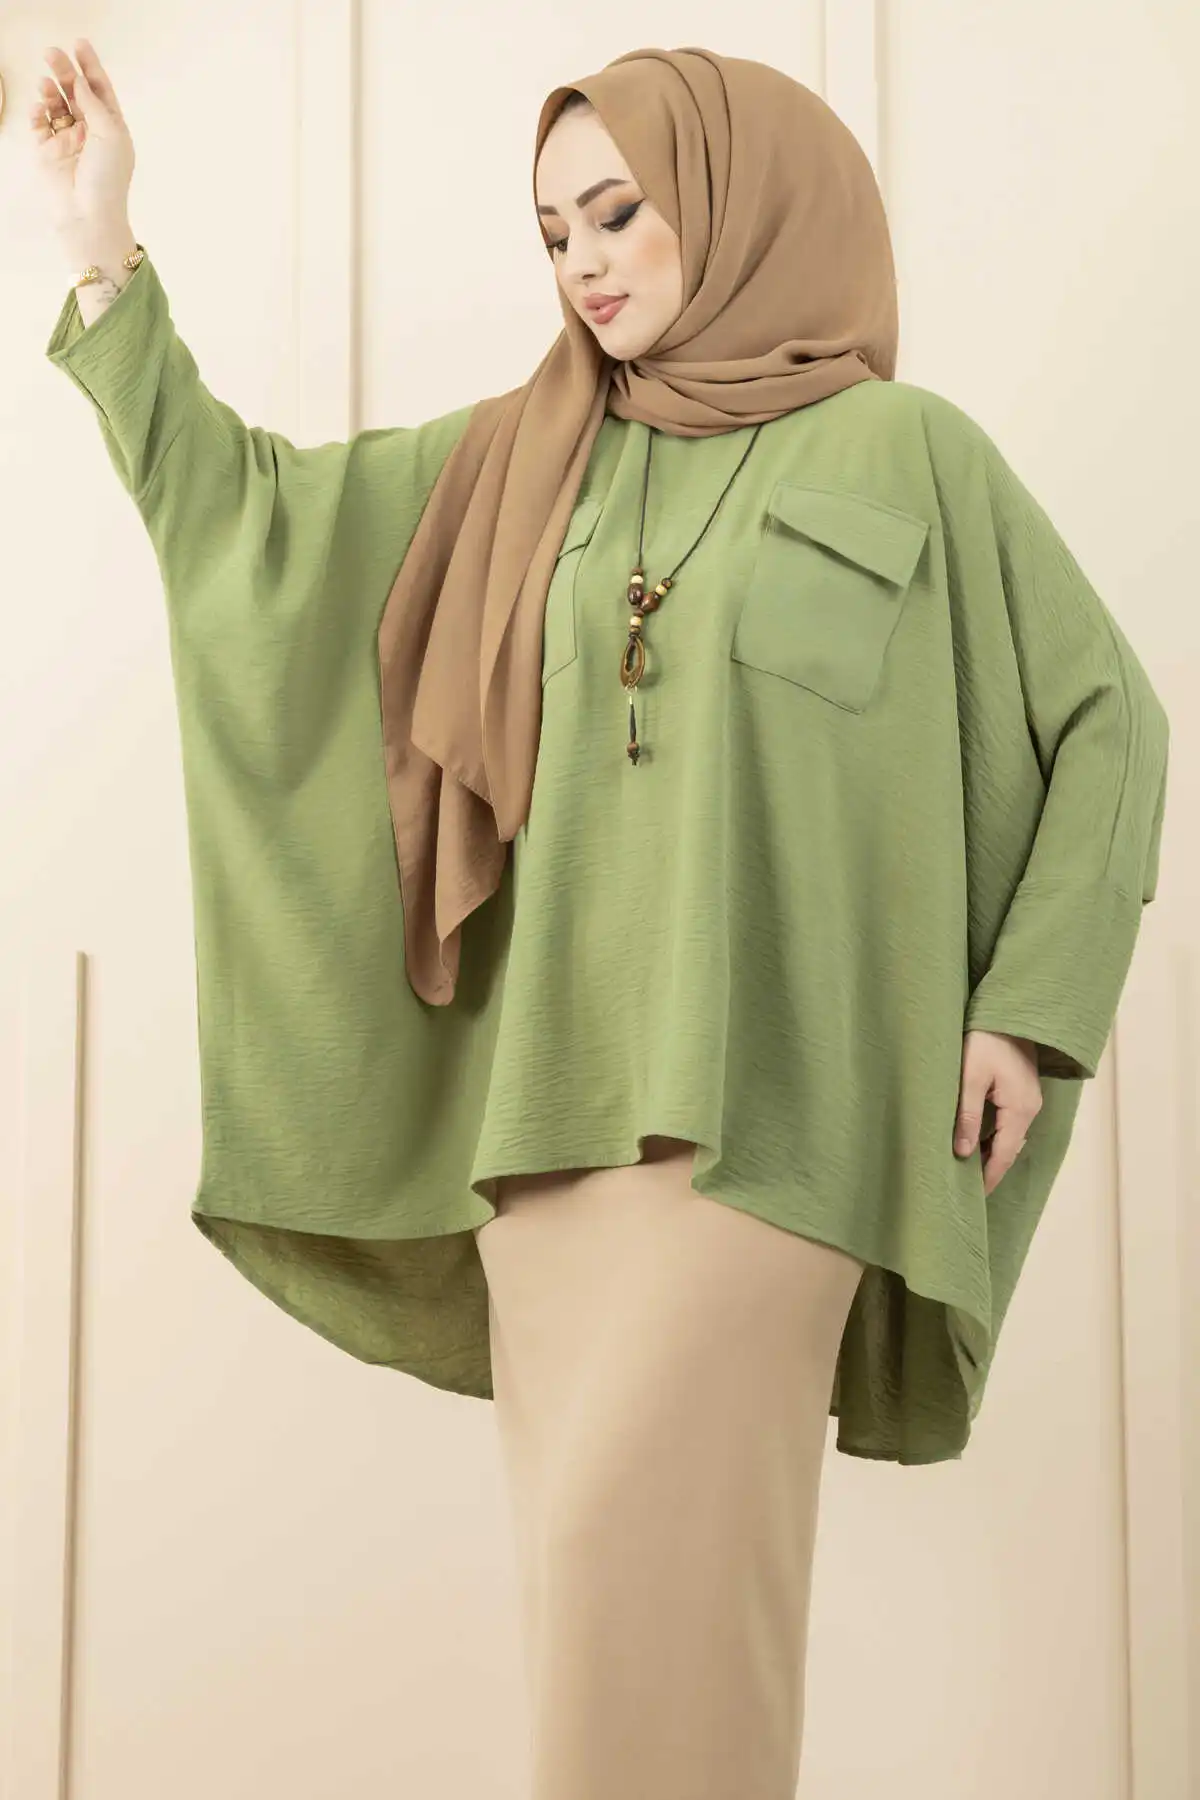 Pocket Top Women's Turkey Blouses Large Tunic Hijab Long Shirt Islamic Clothing Ramadan Turkish Clothes Free Shipping 2022